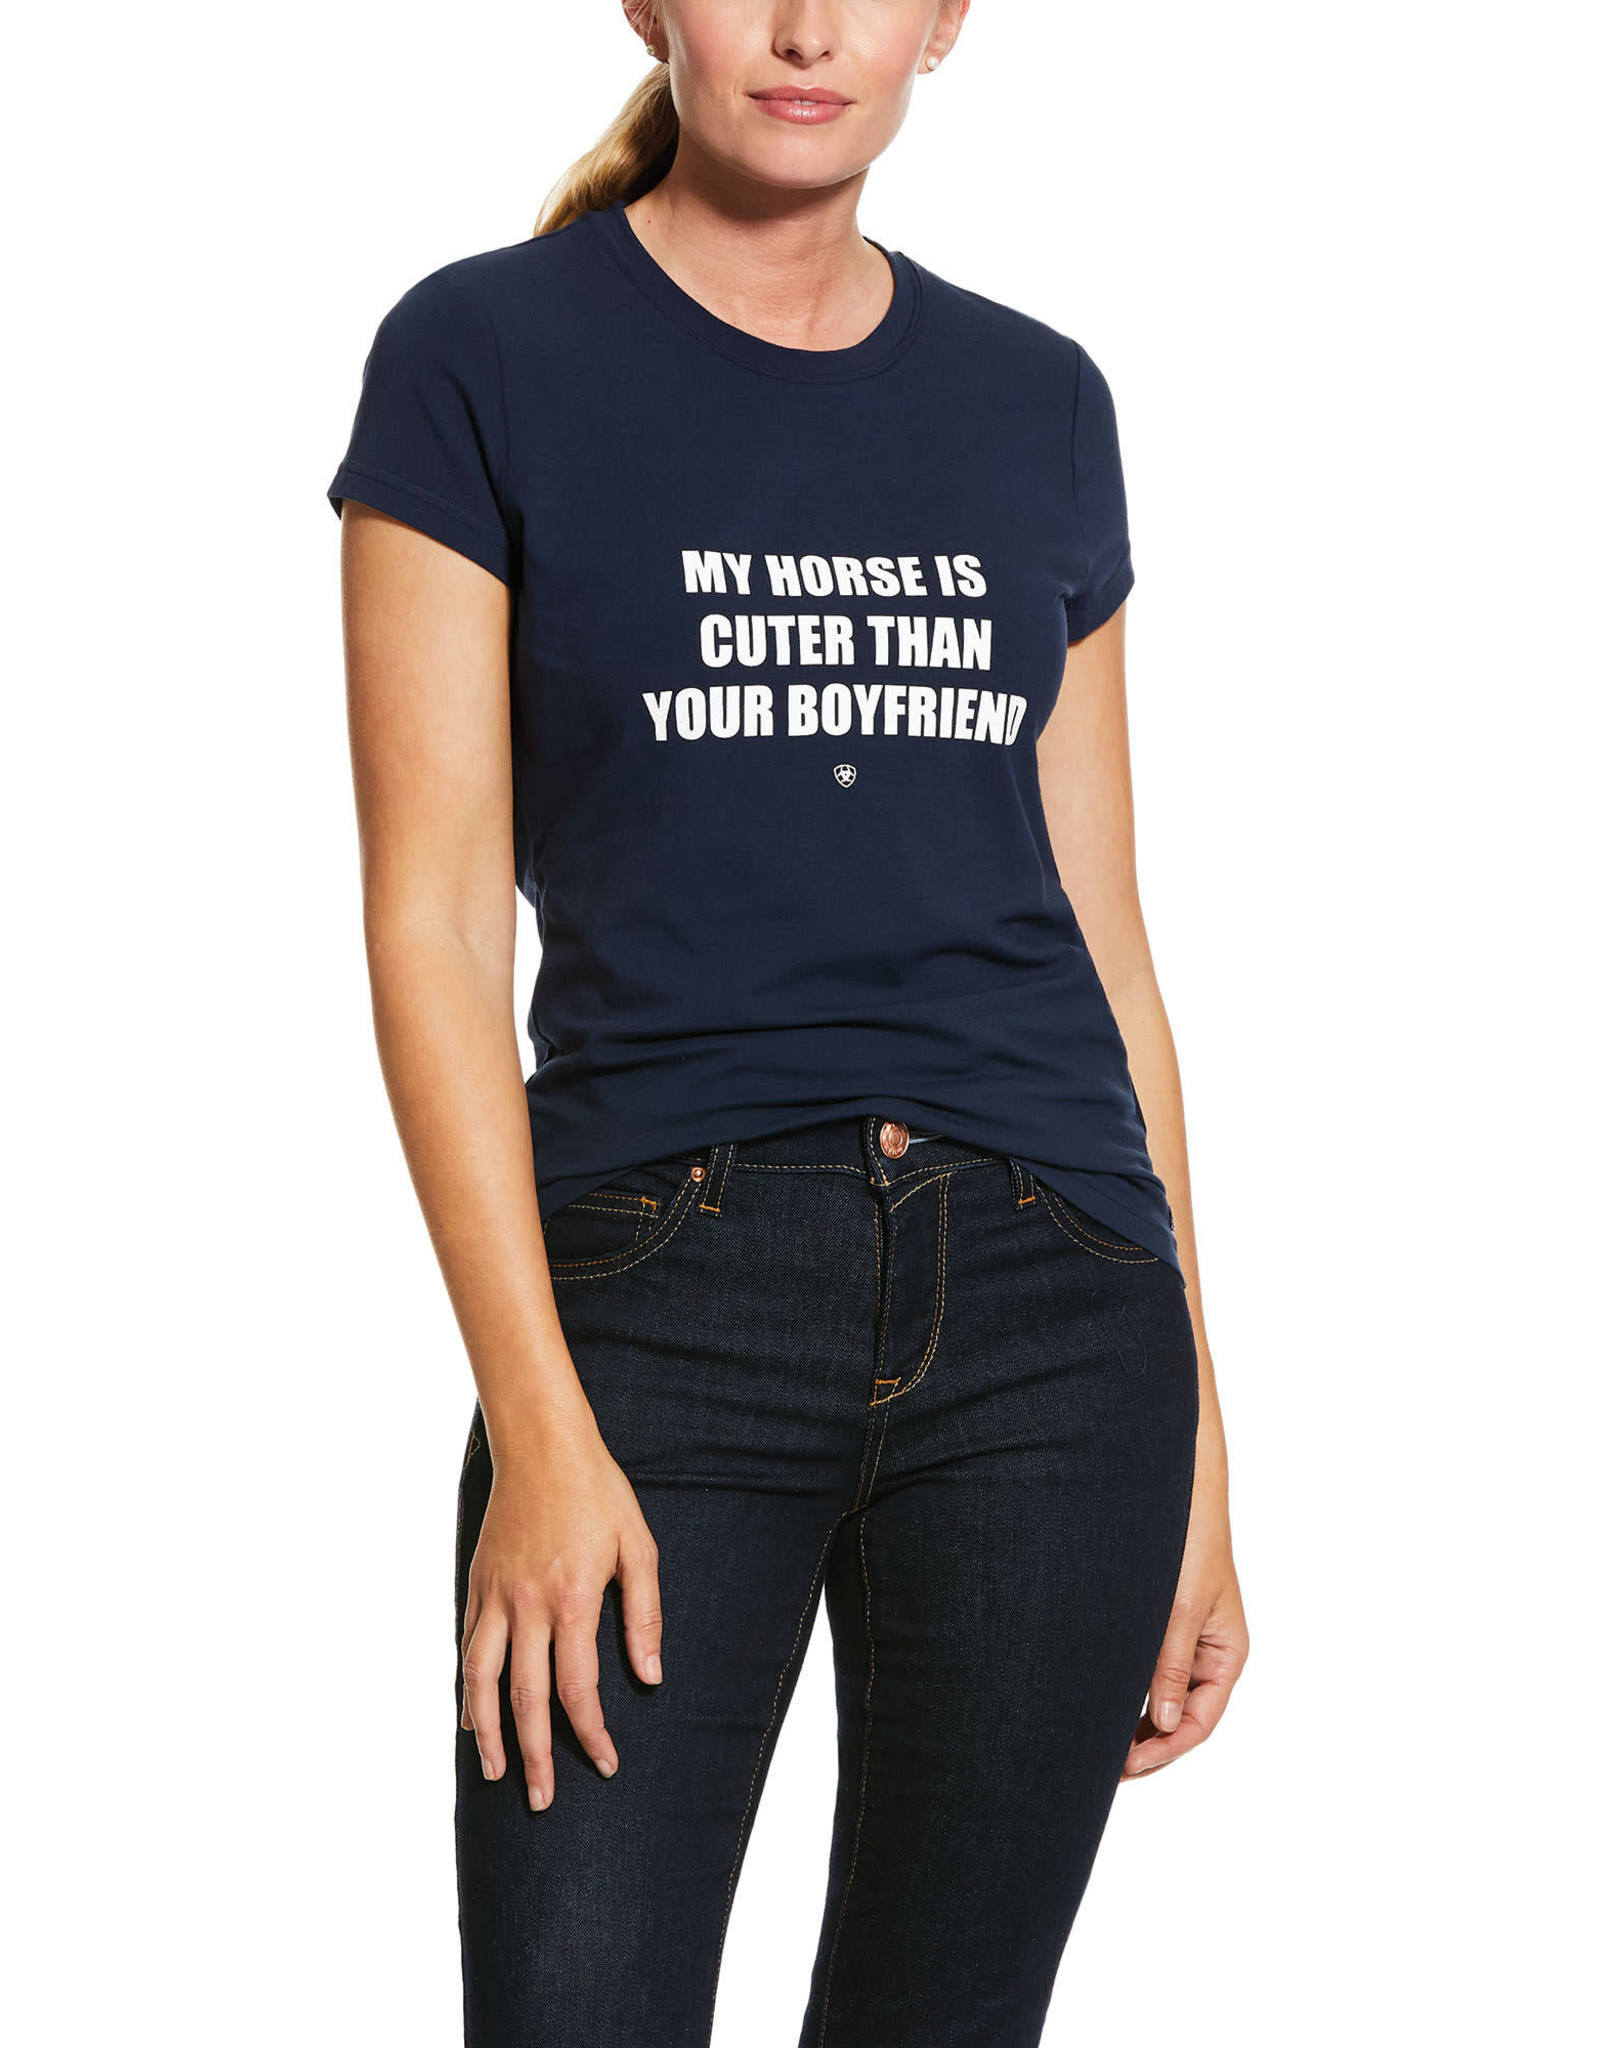 Ariat Ariat Womens Navy T-Shirt "My Horse Is Cuter Than Your Boyfriend"